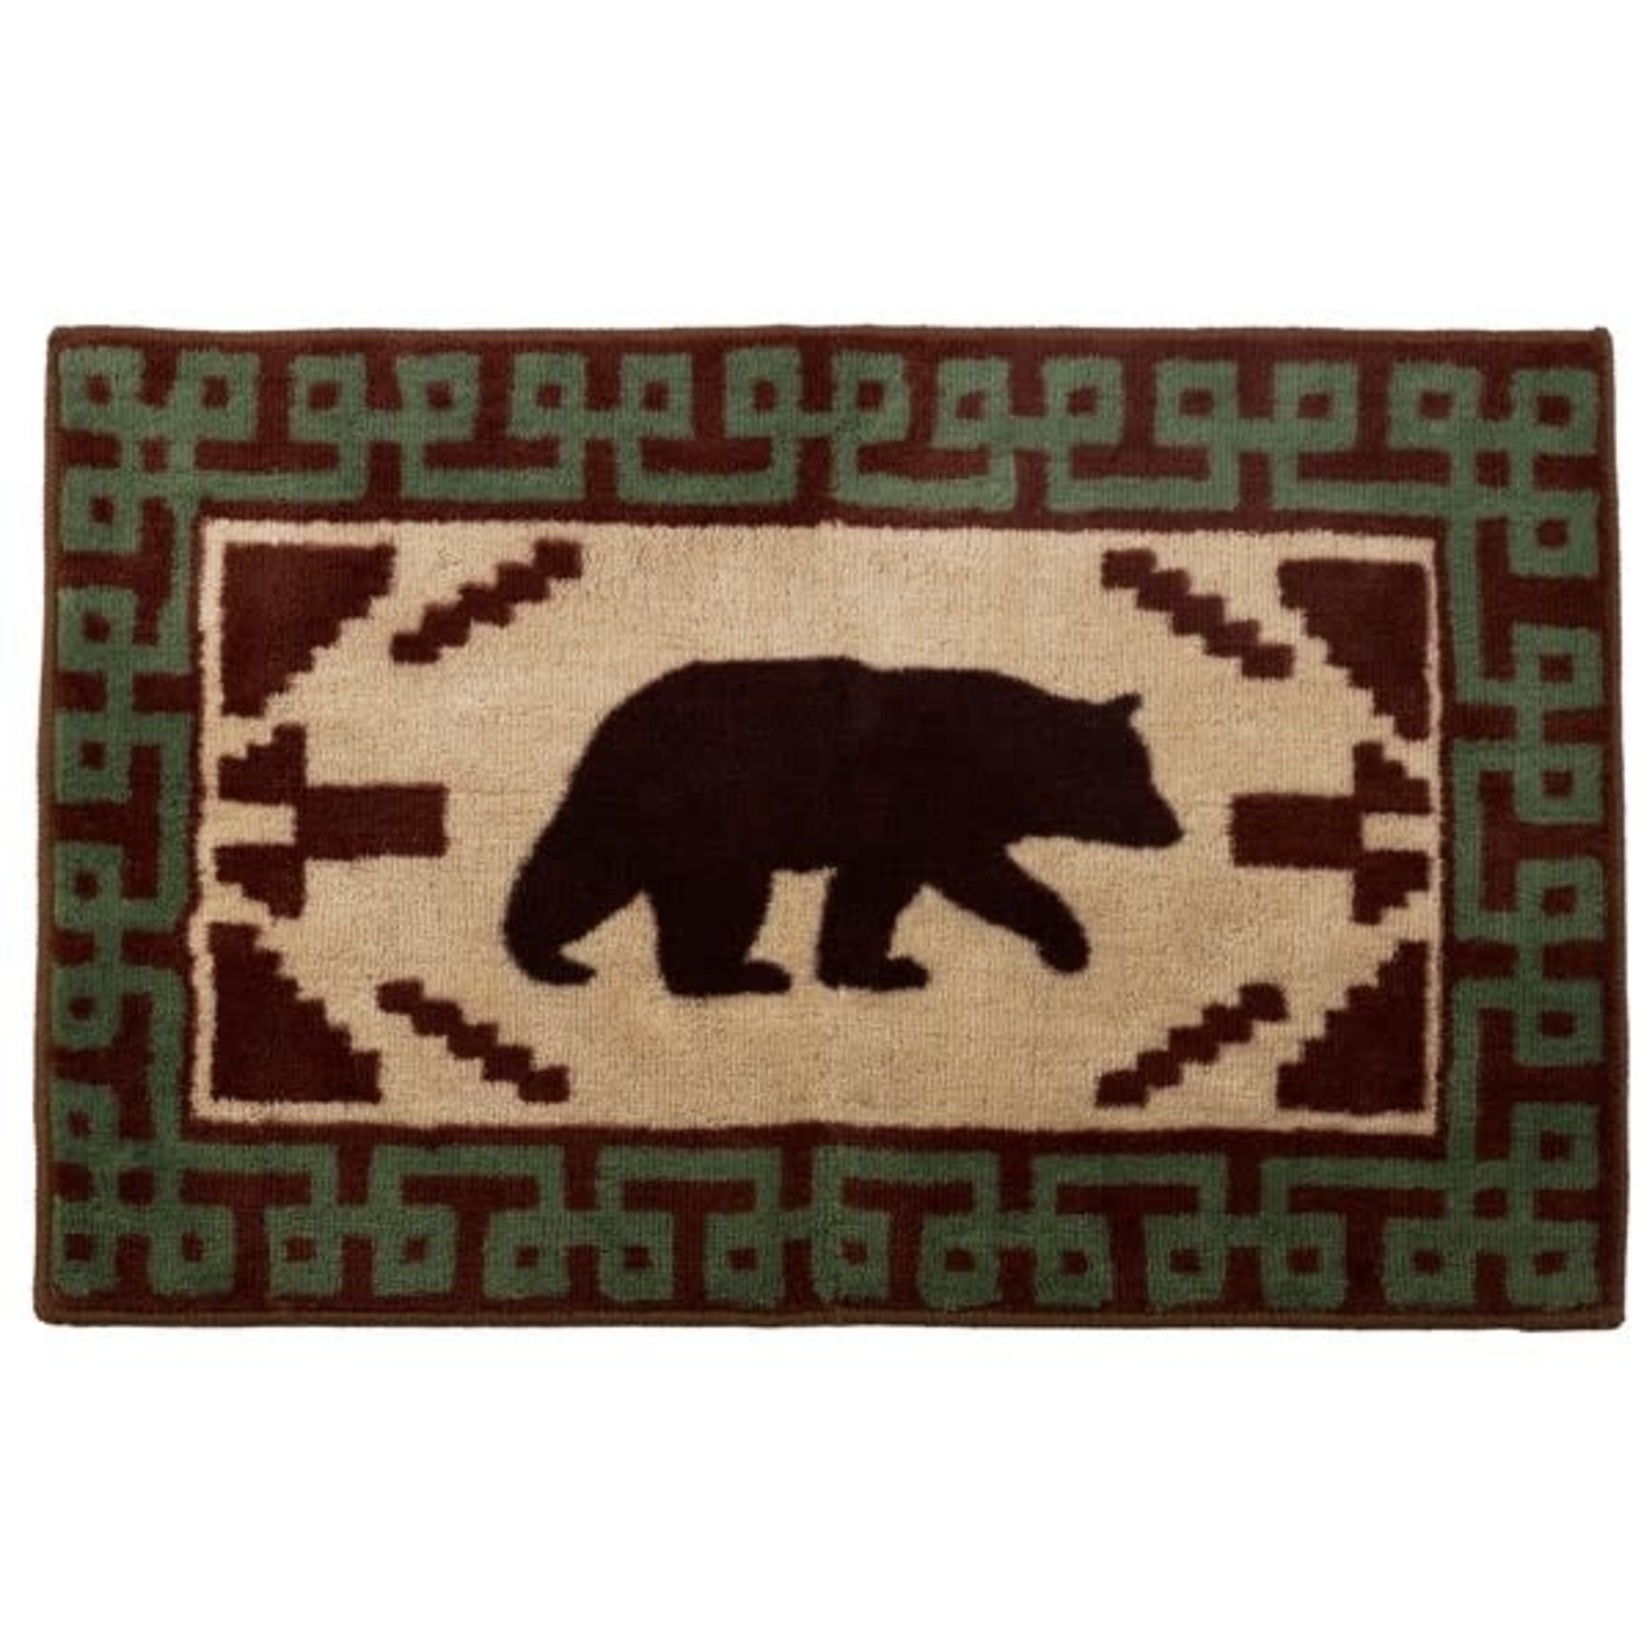 Bear with a green border rug